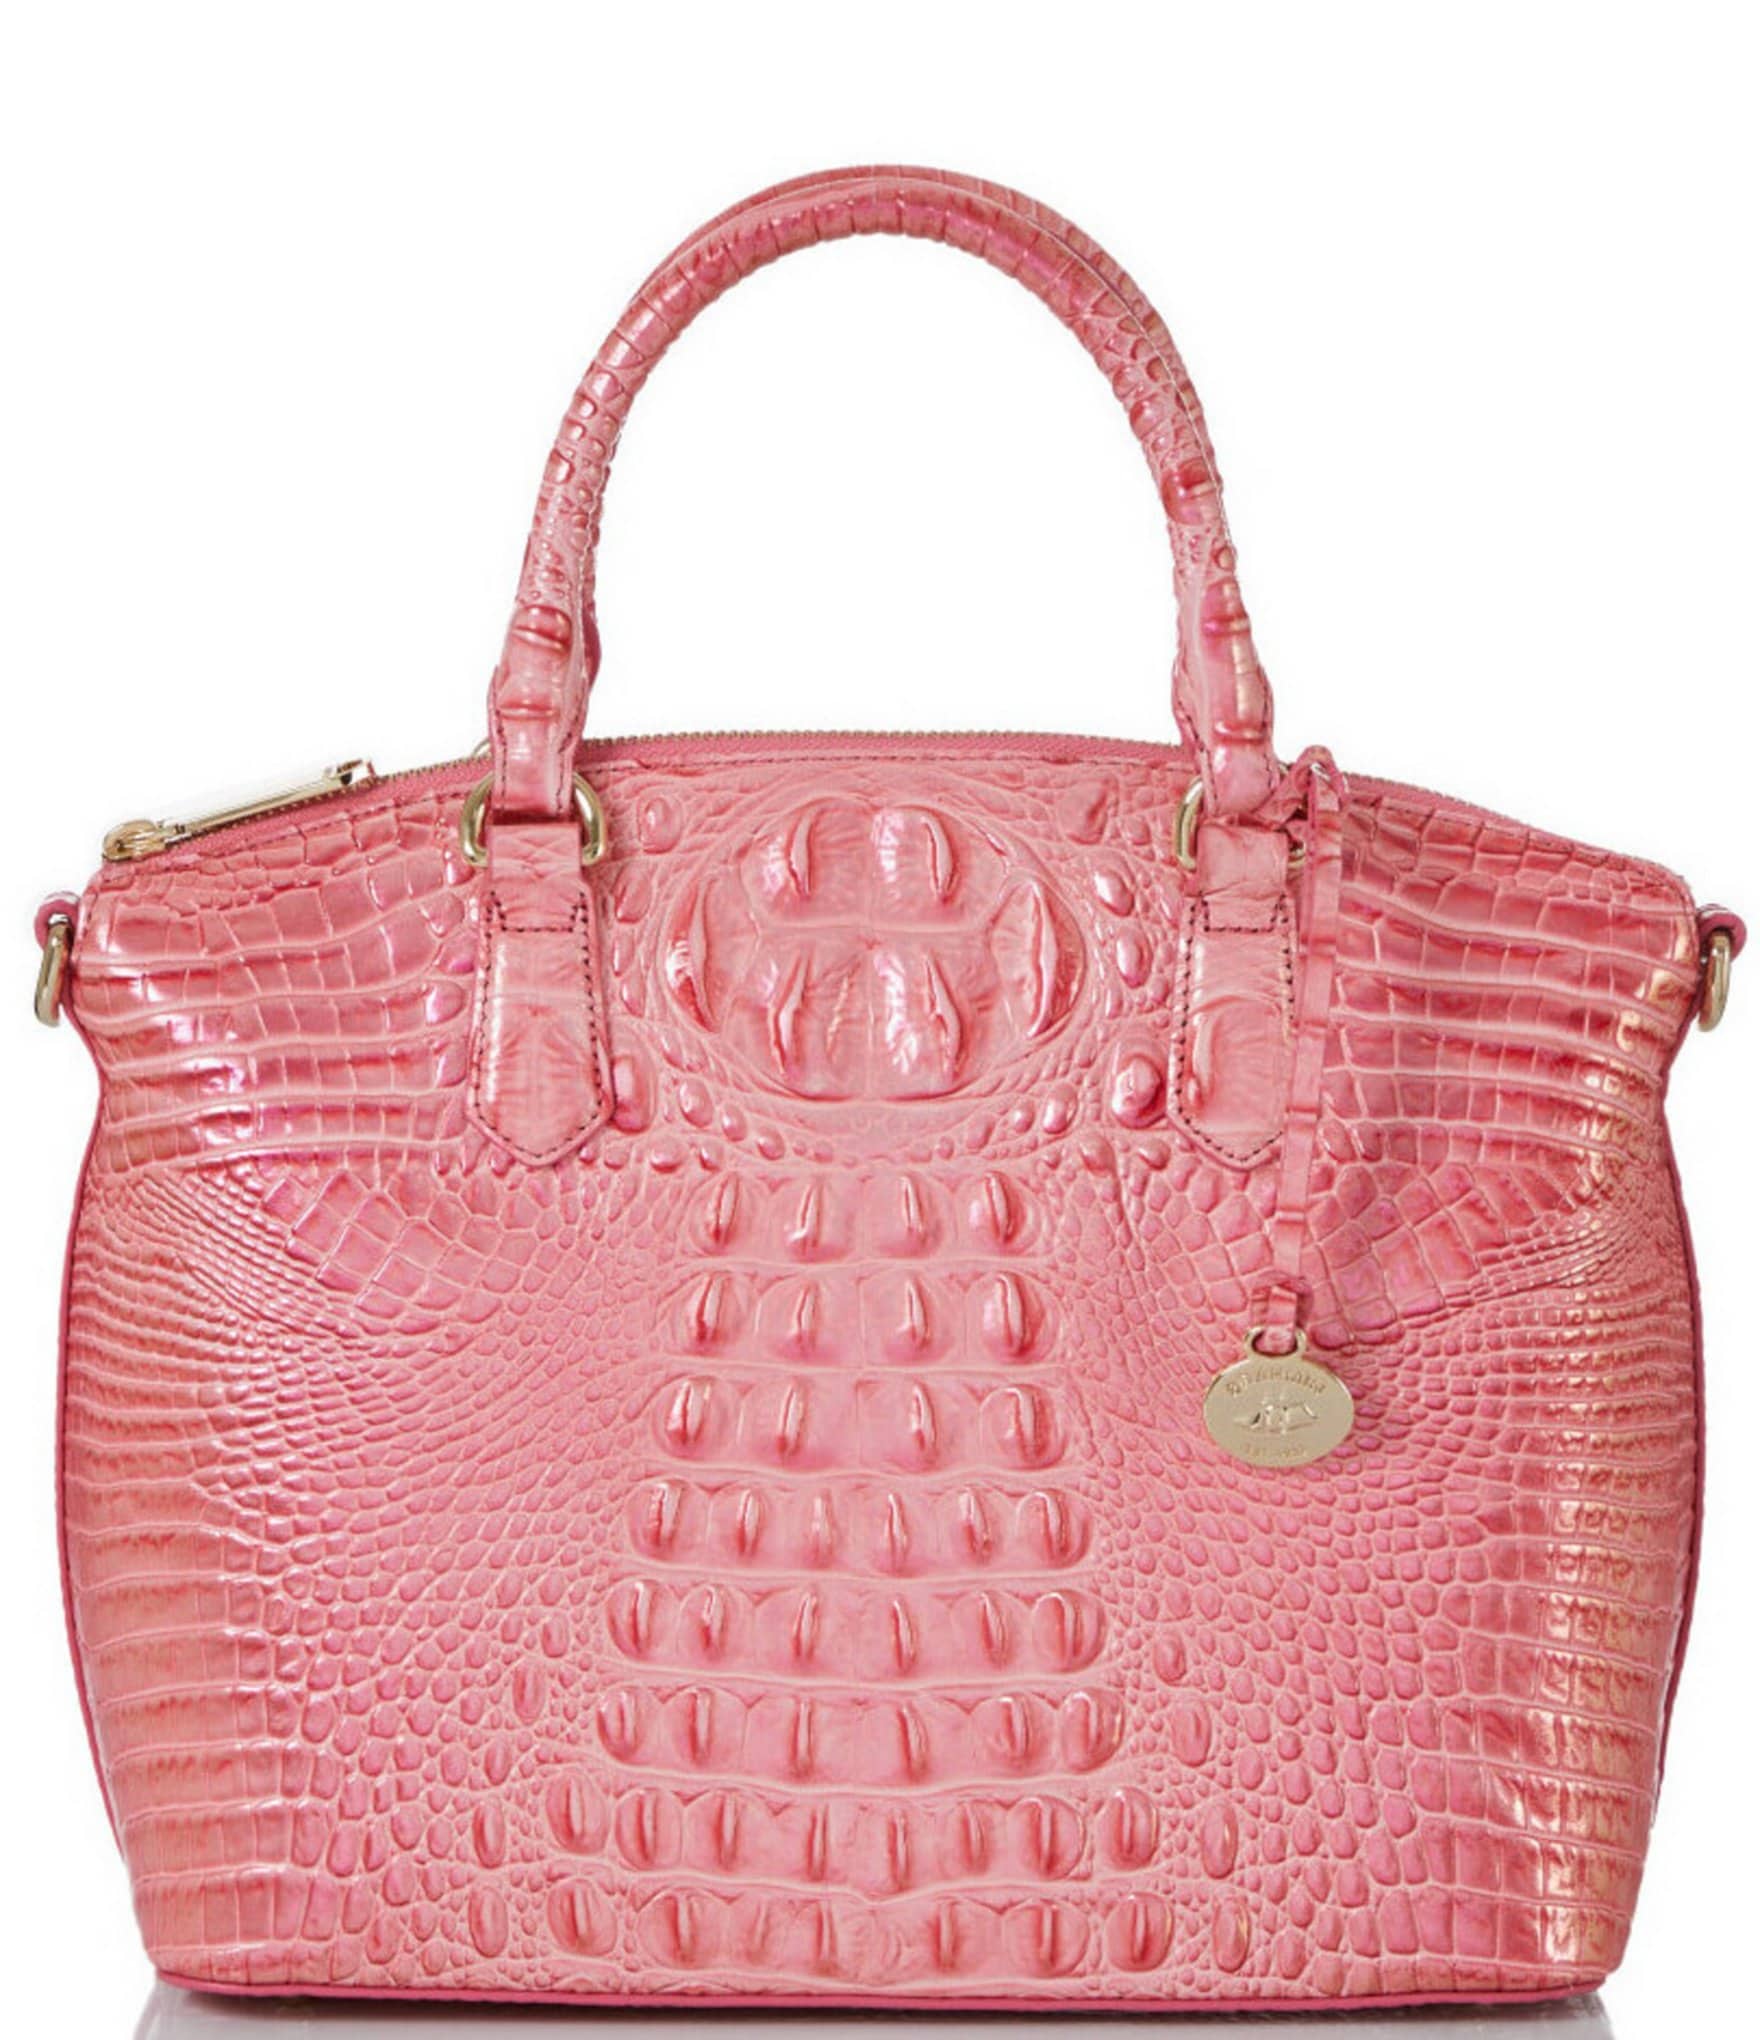 NWT BRAHMIN Duxbury Satchel Handbag in🍑BELLINI, Peachy Pink